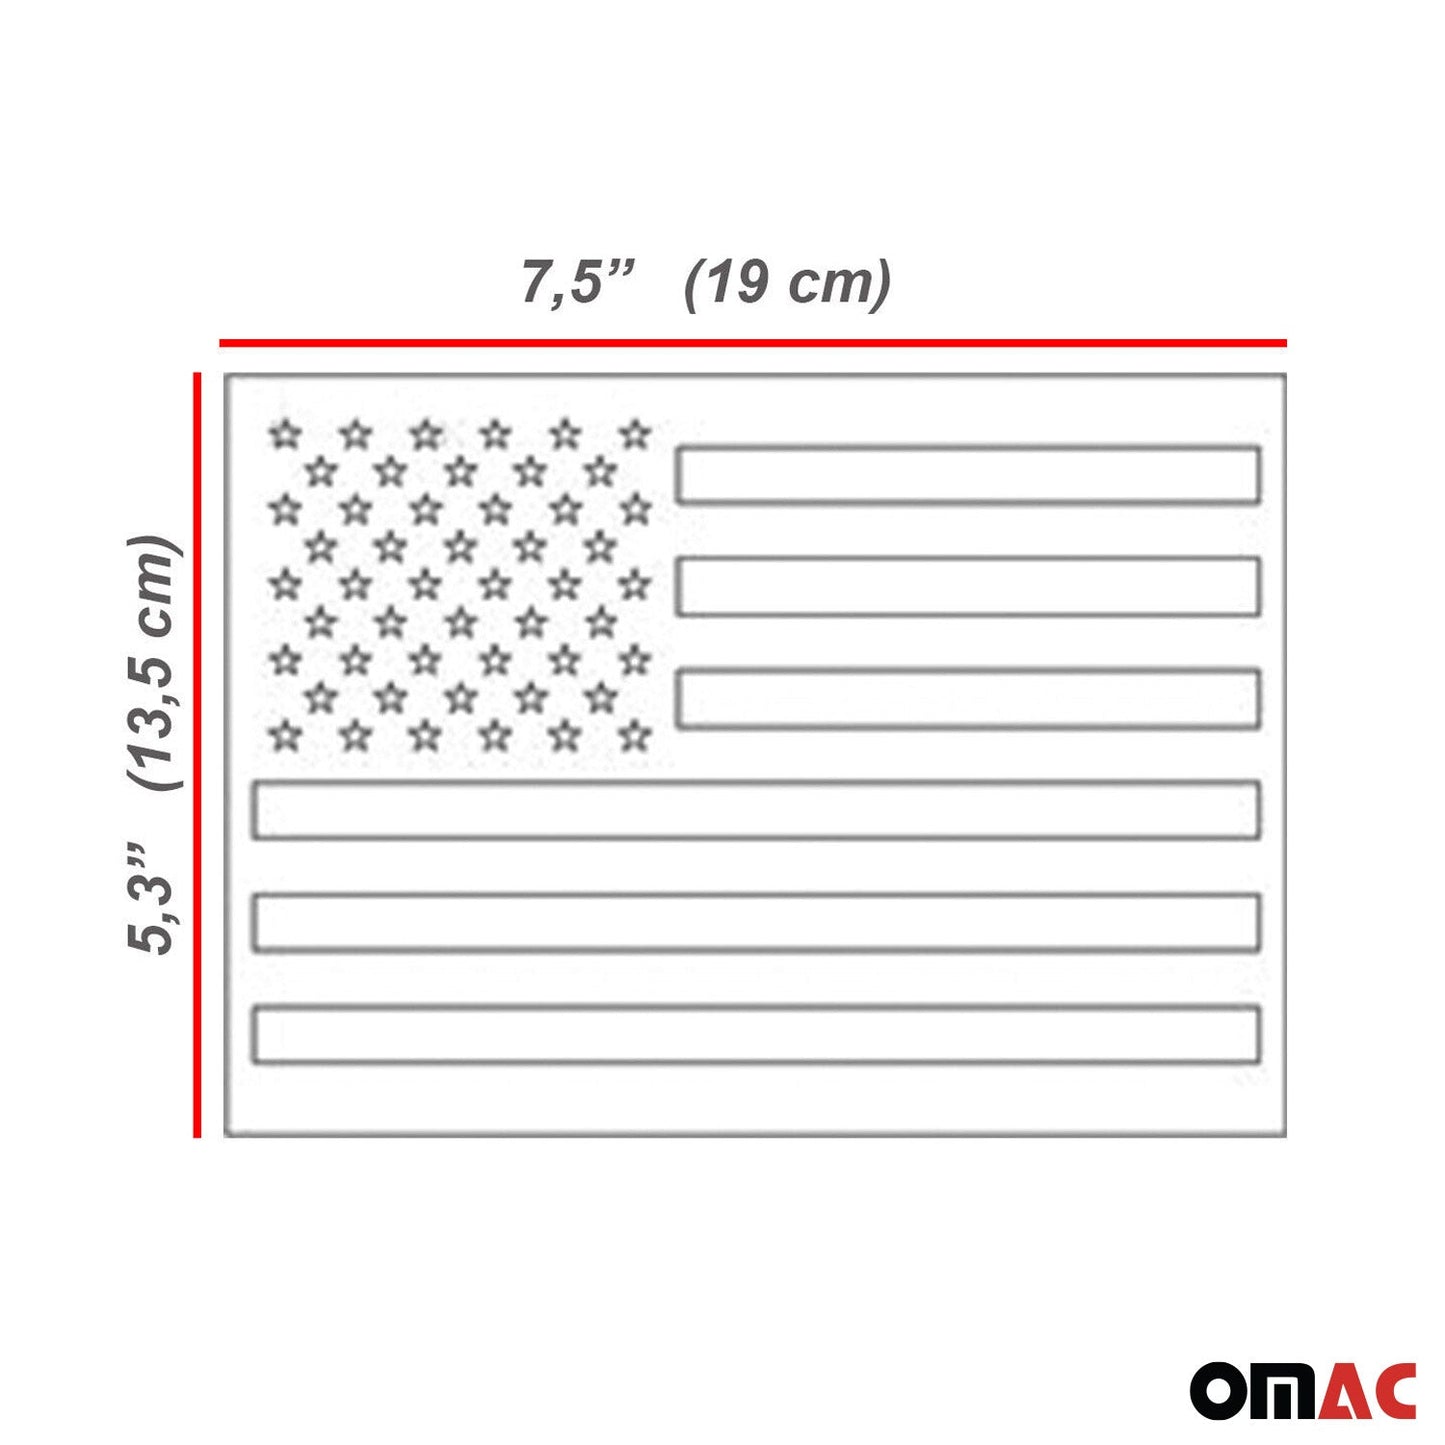 OMAC US American Flag Brushed Steel Decal Sticker Emblem for Ford F-250 Super Duty U020250